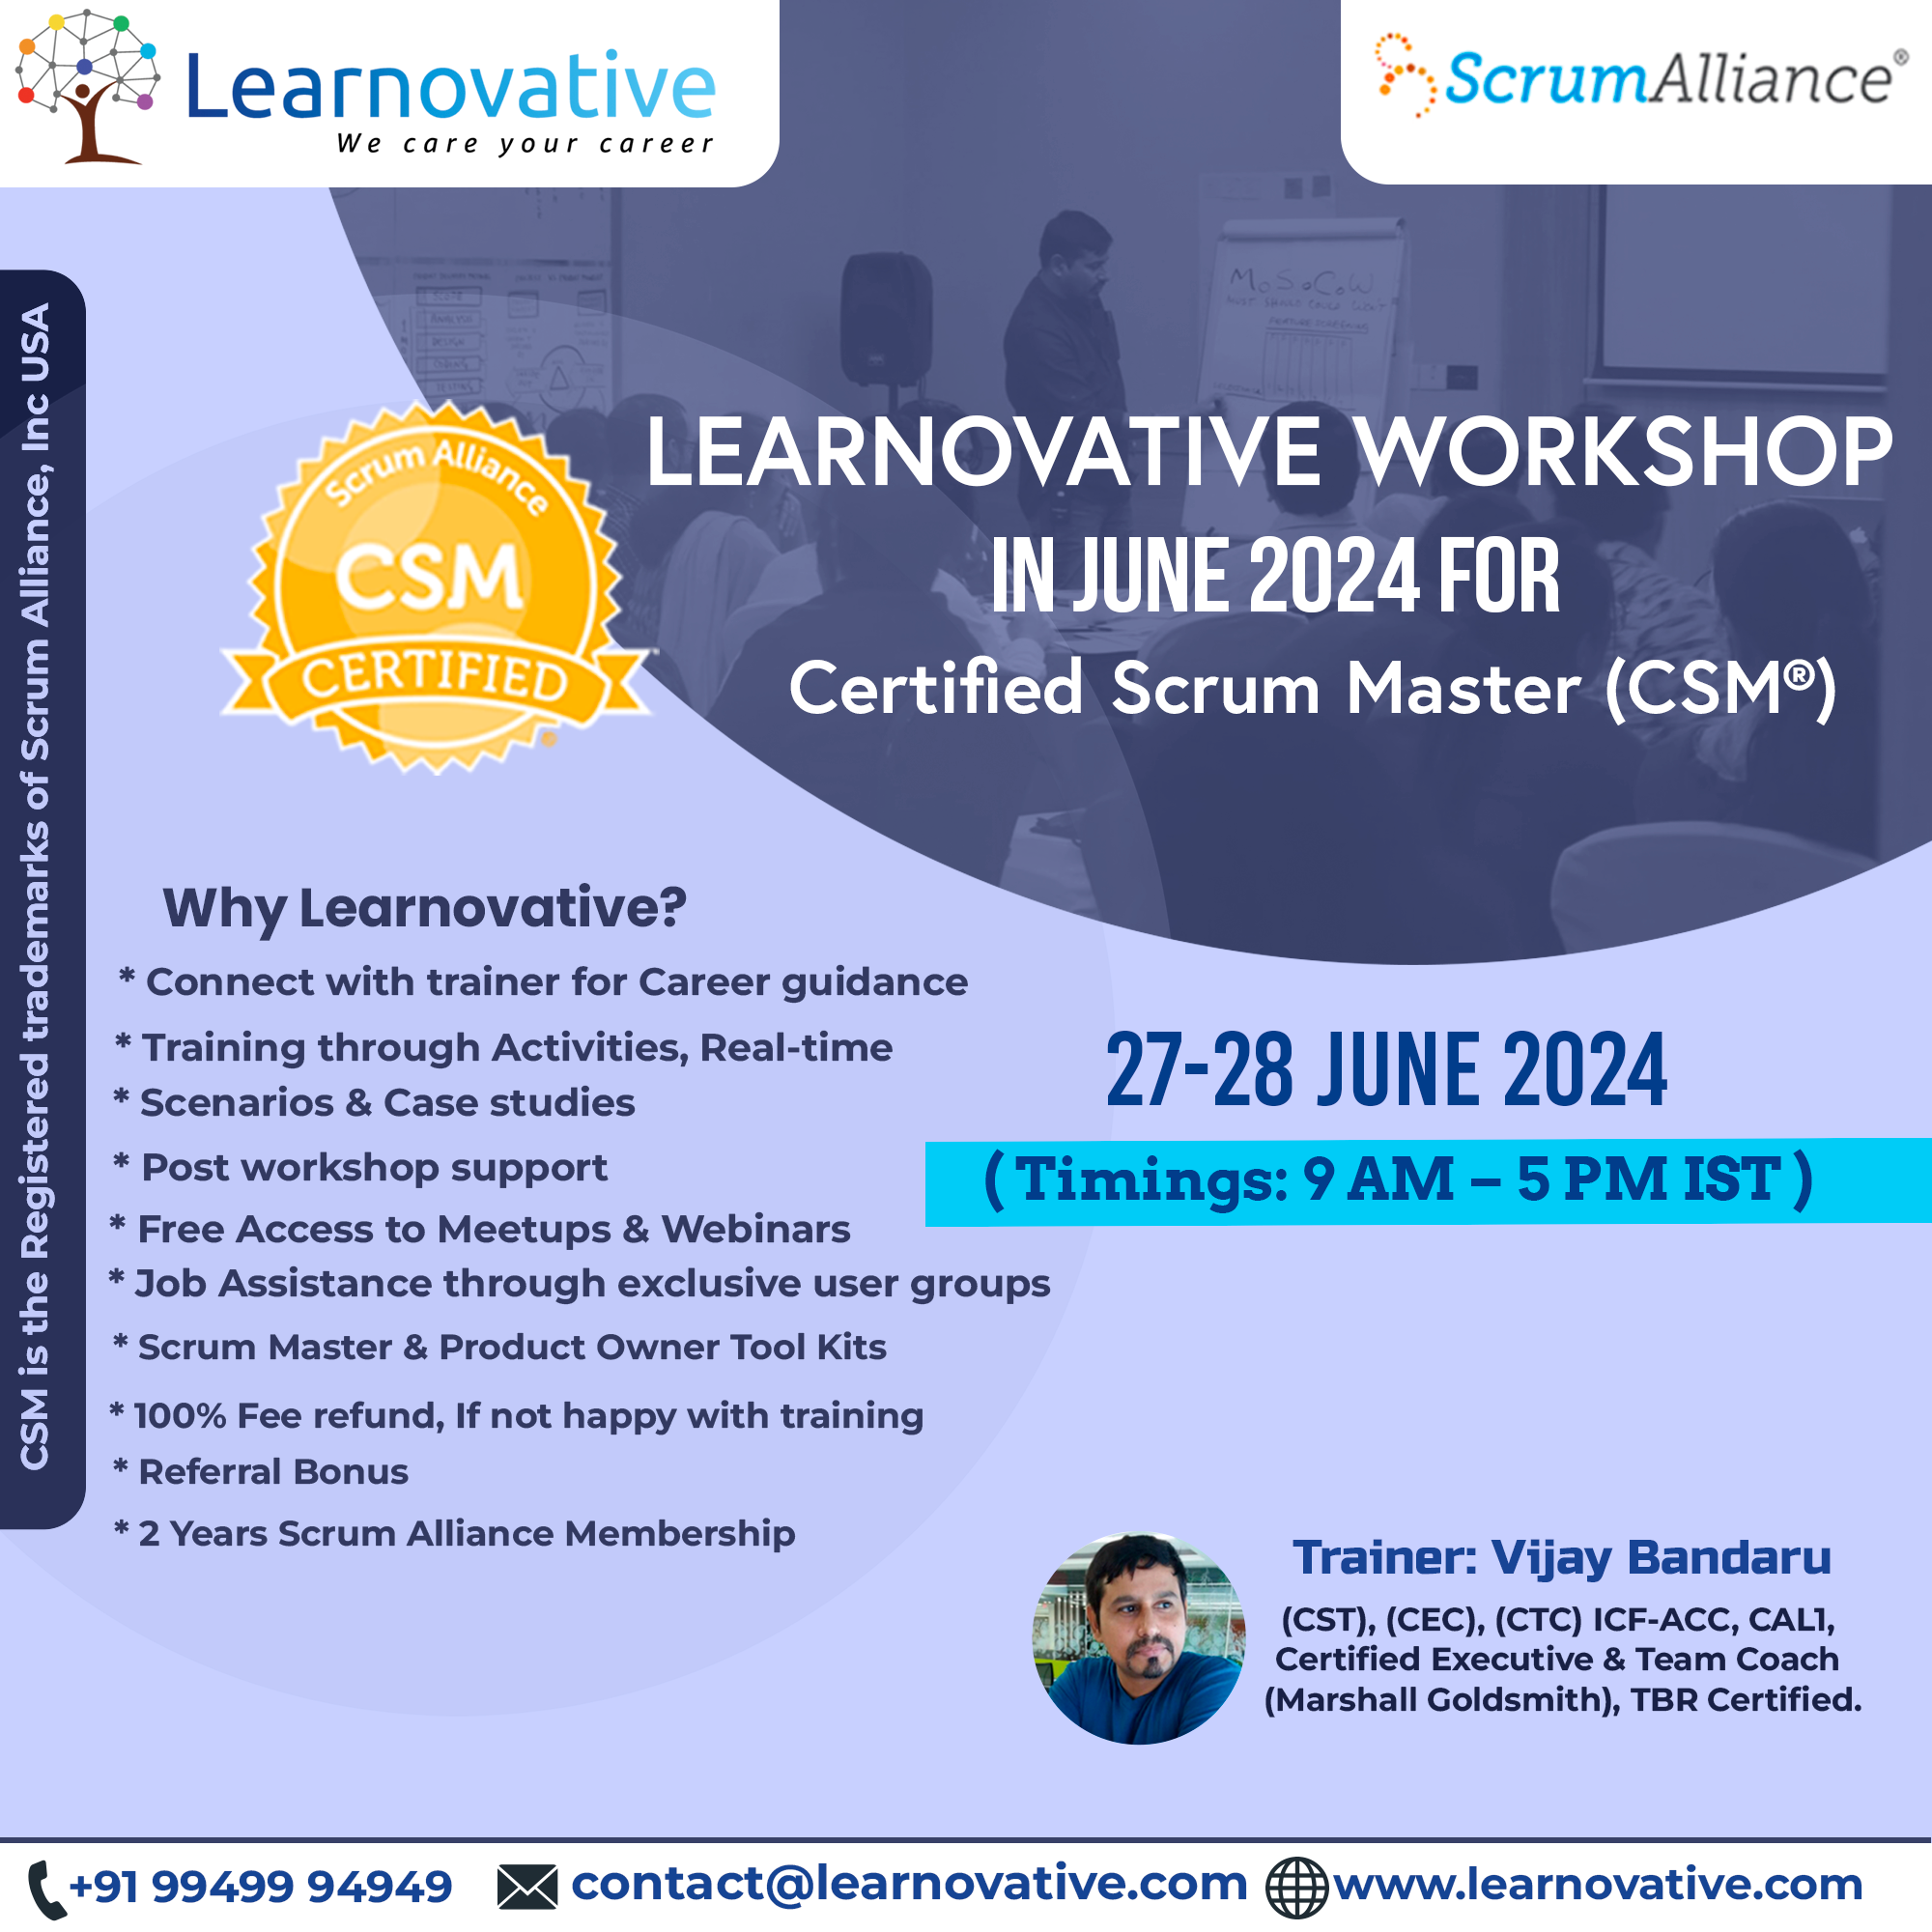 CSM Certification Live Virtual Classroom (LVC) Online | June 27-28, 2024 | Learnovative, Online Event